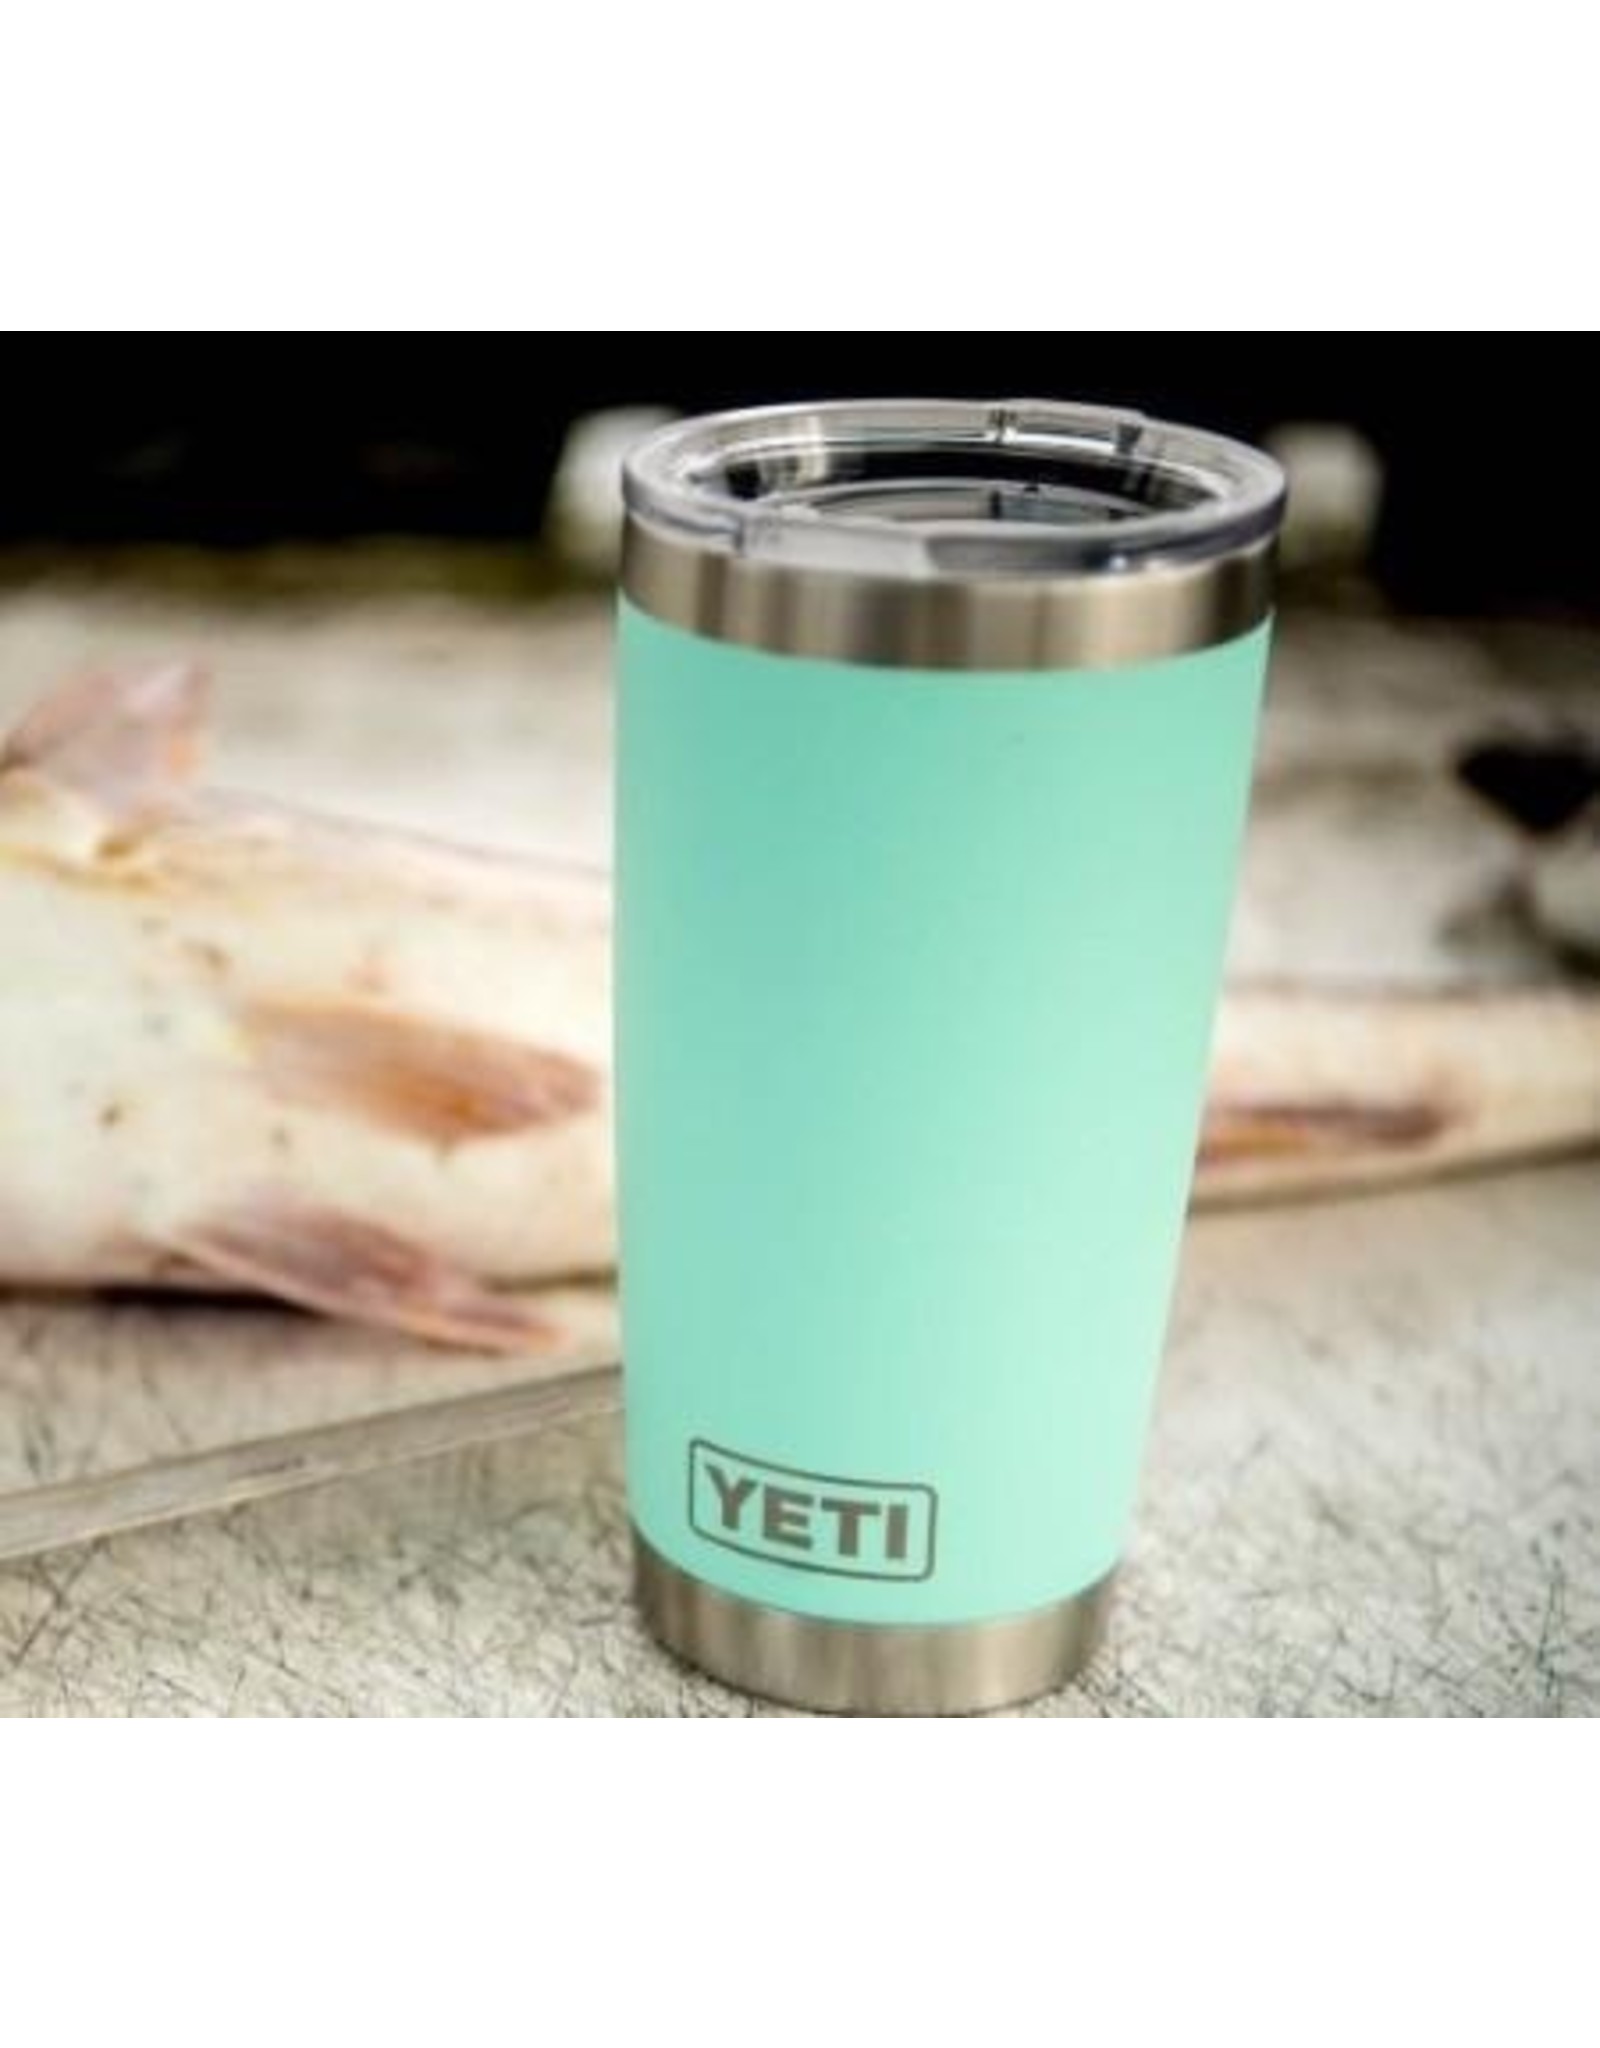 YETI / Rambler 20 oz Travel Mug - Seafoam